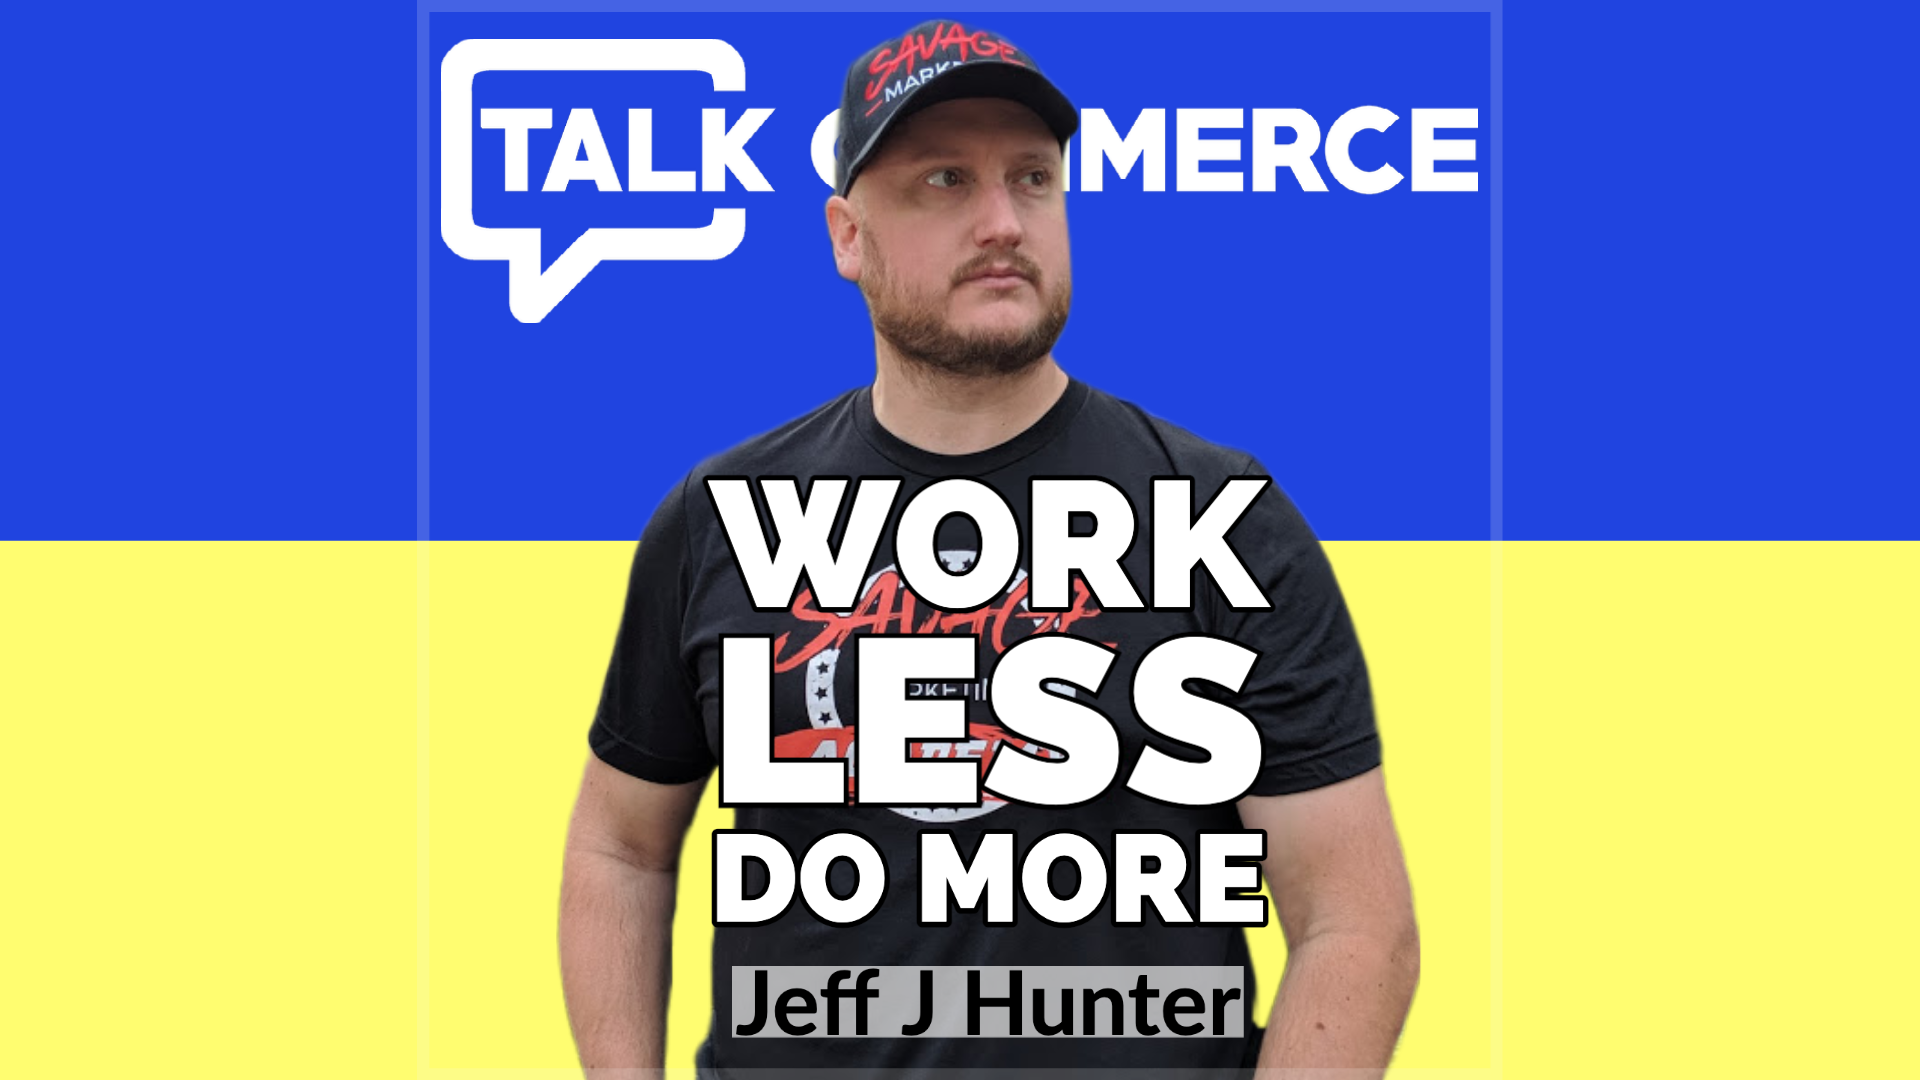 Talk-Commerce Jeff J Hunter